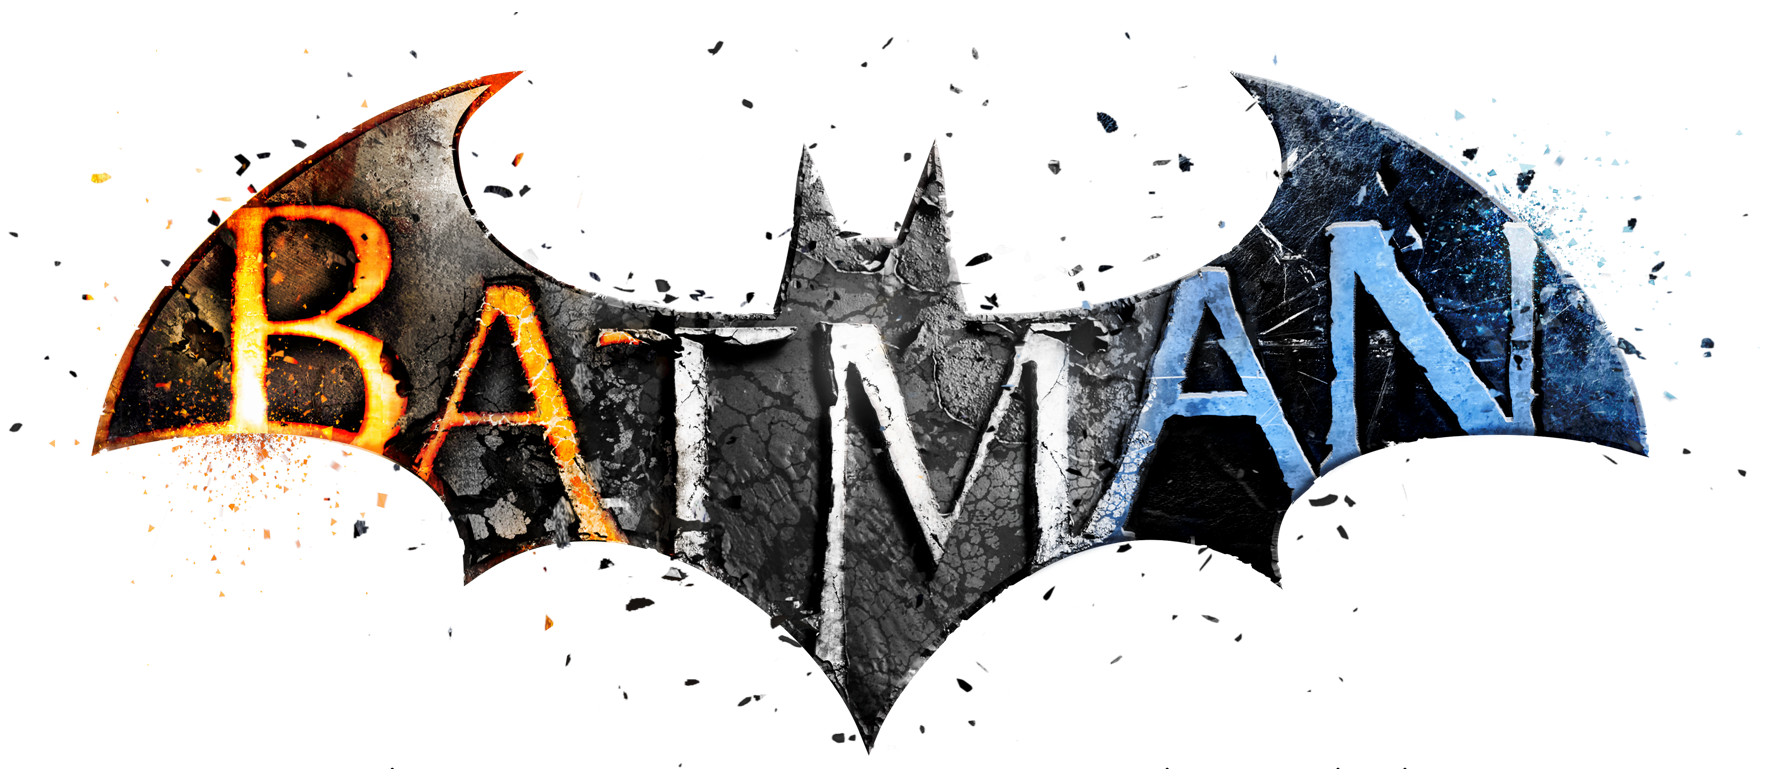 City Art Arkham Batman Brand Knight Asylum PNG Image